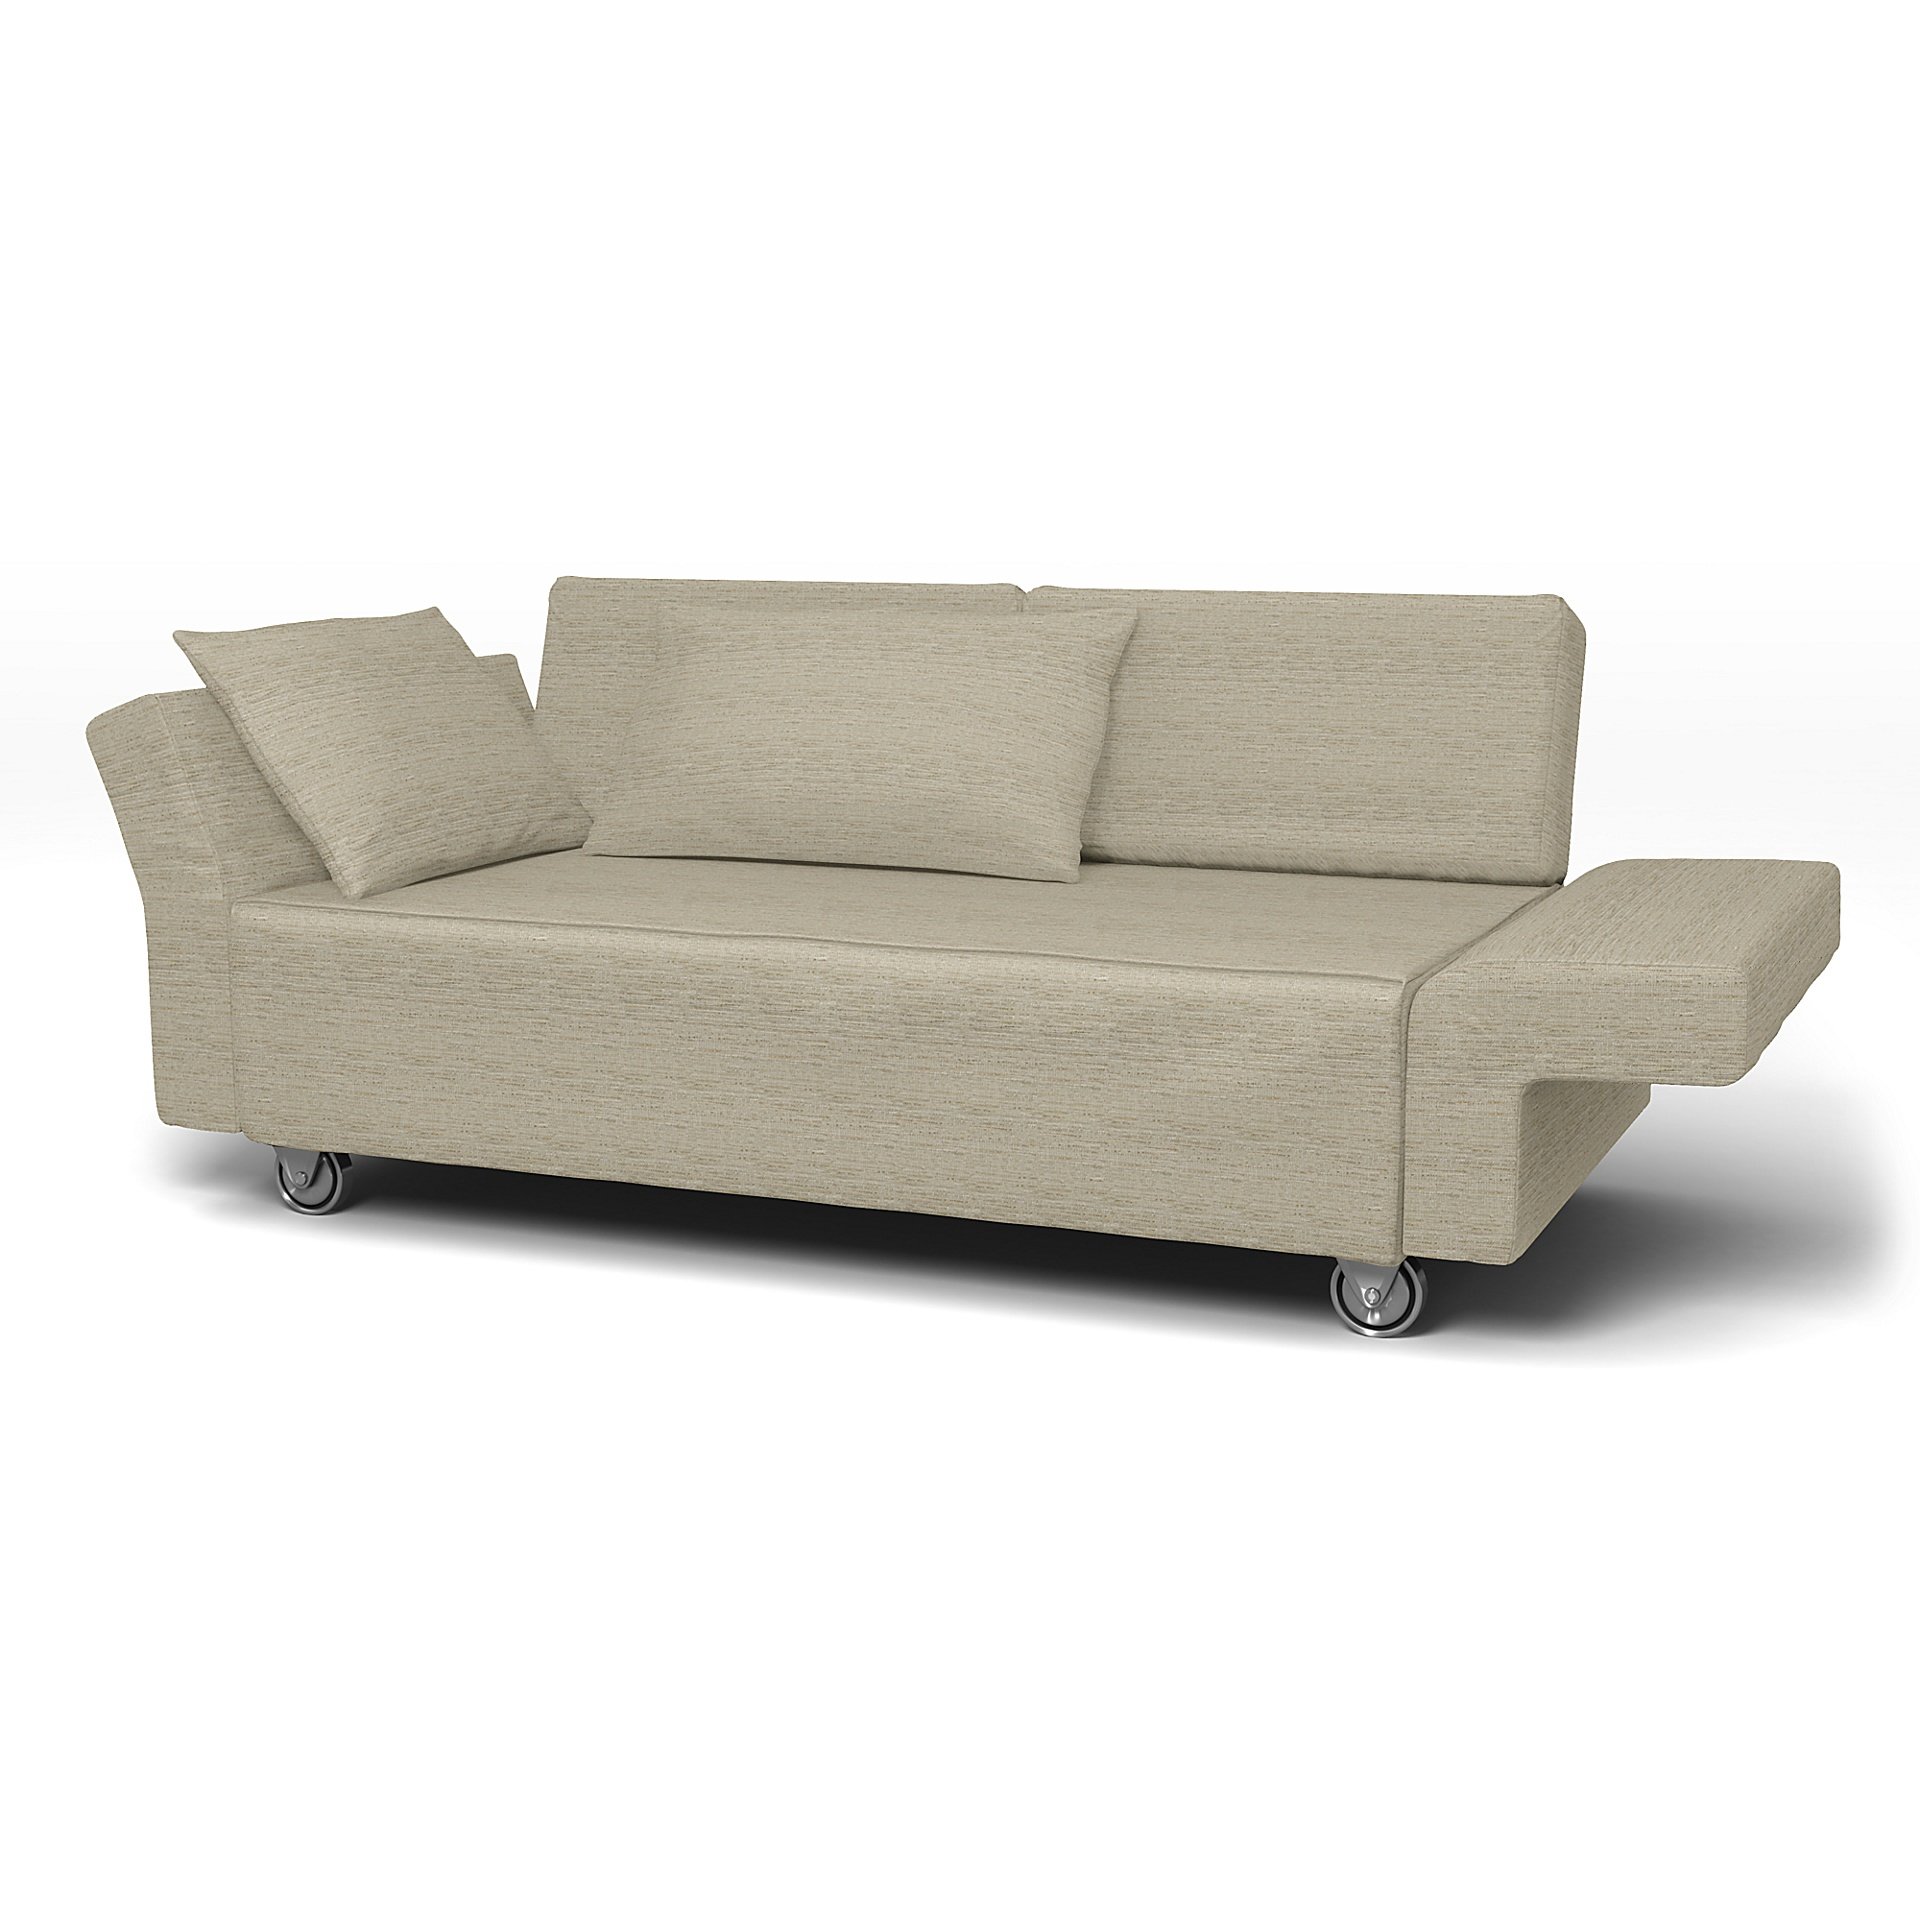 IKEA - Falsterbo 2 Seater Sofa Cover, Light Sand, Boucle & Texture - Bemz